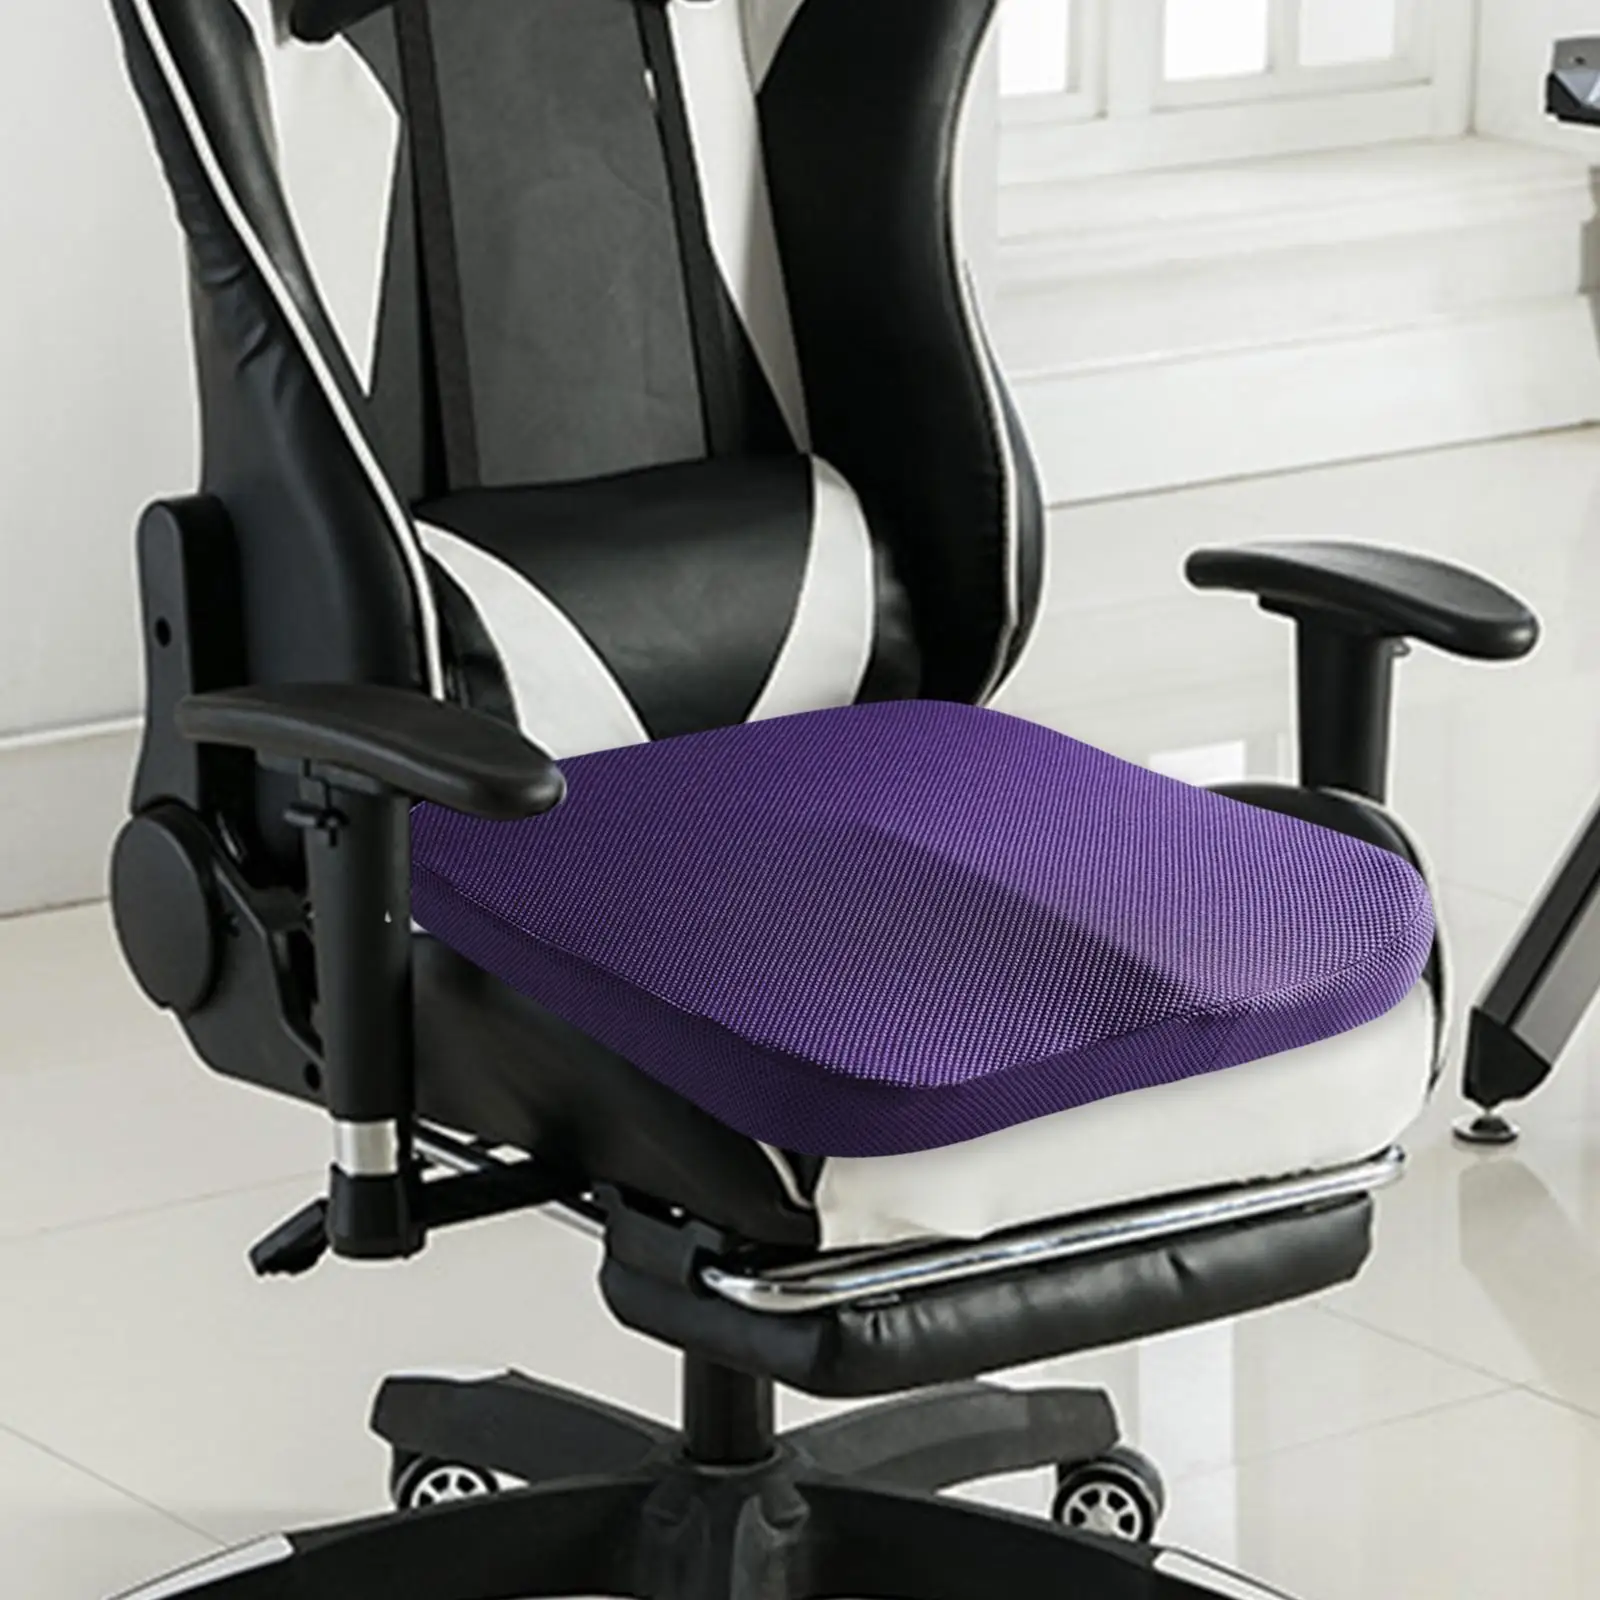 Summer Memory Foam Seat Cushion Breathable Non-Slip Support BuCushion 